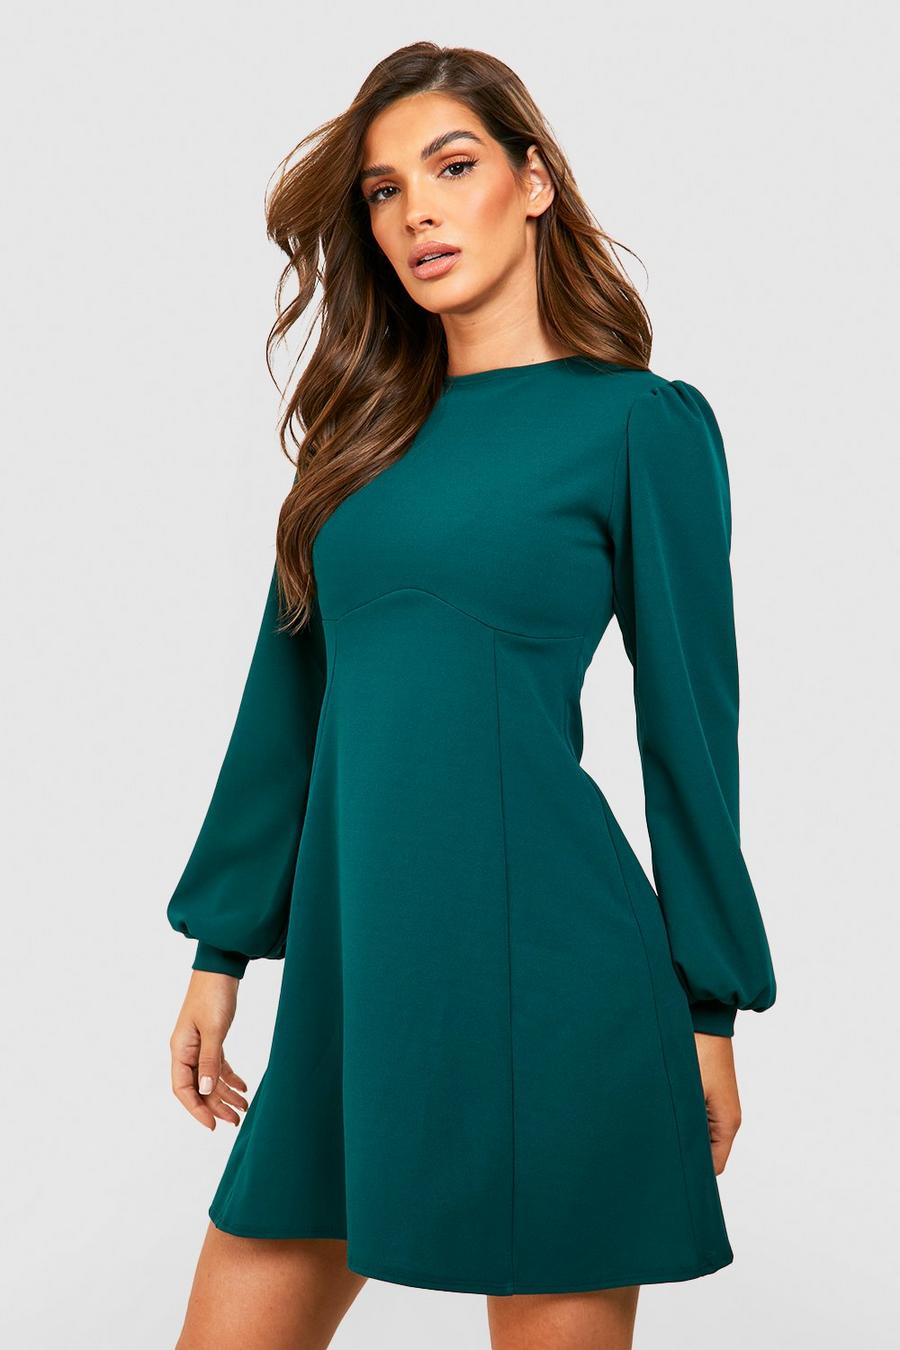 Green Dresses | Emerald, Teal & Khaki Green Dresses | boohoo USA